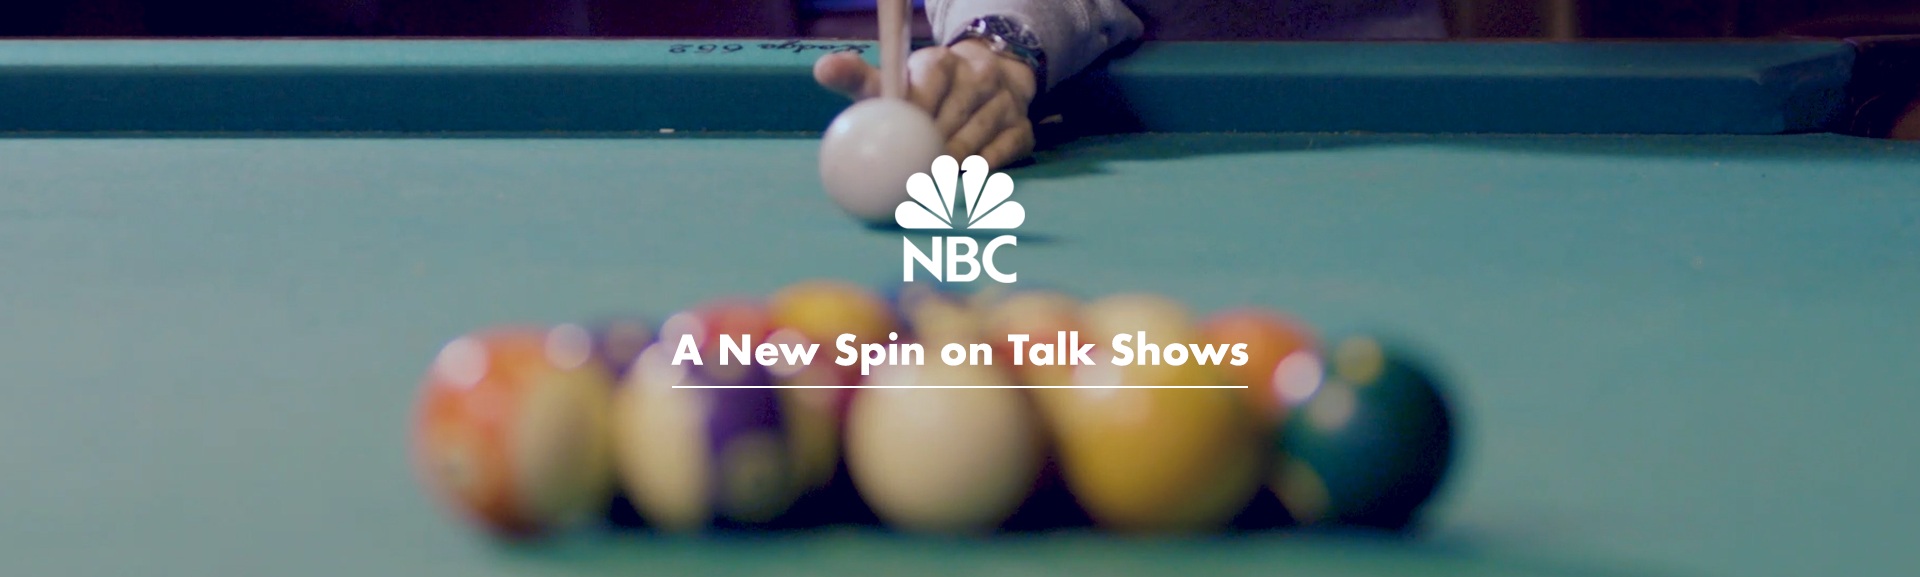 NBC+break+shot+carousel+banner.jpg